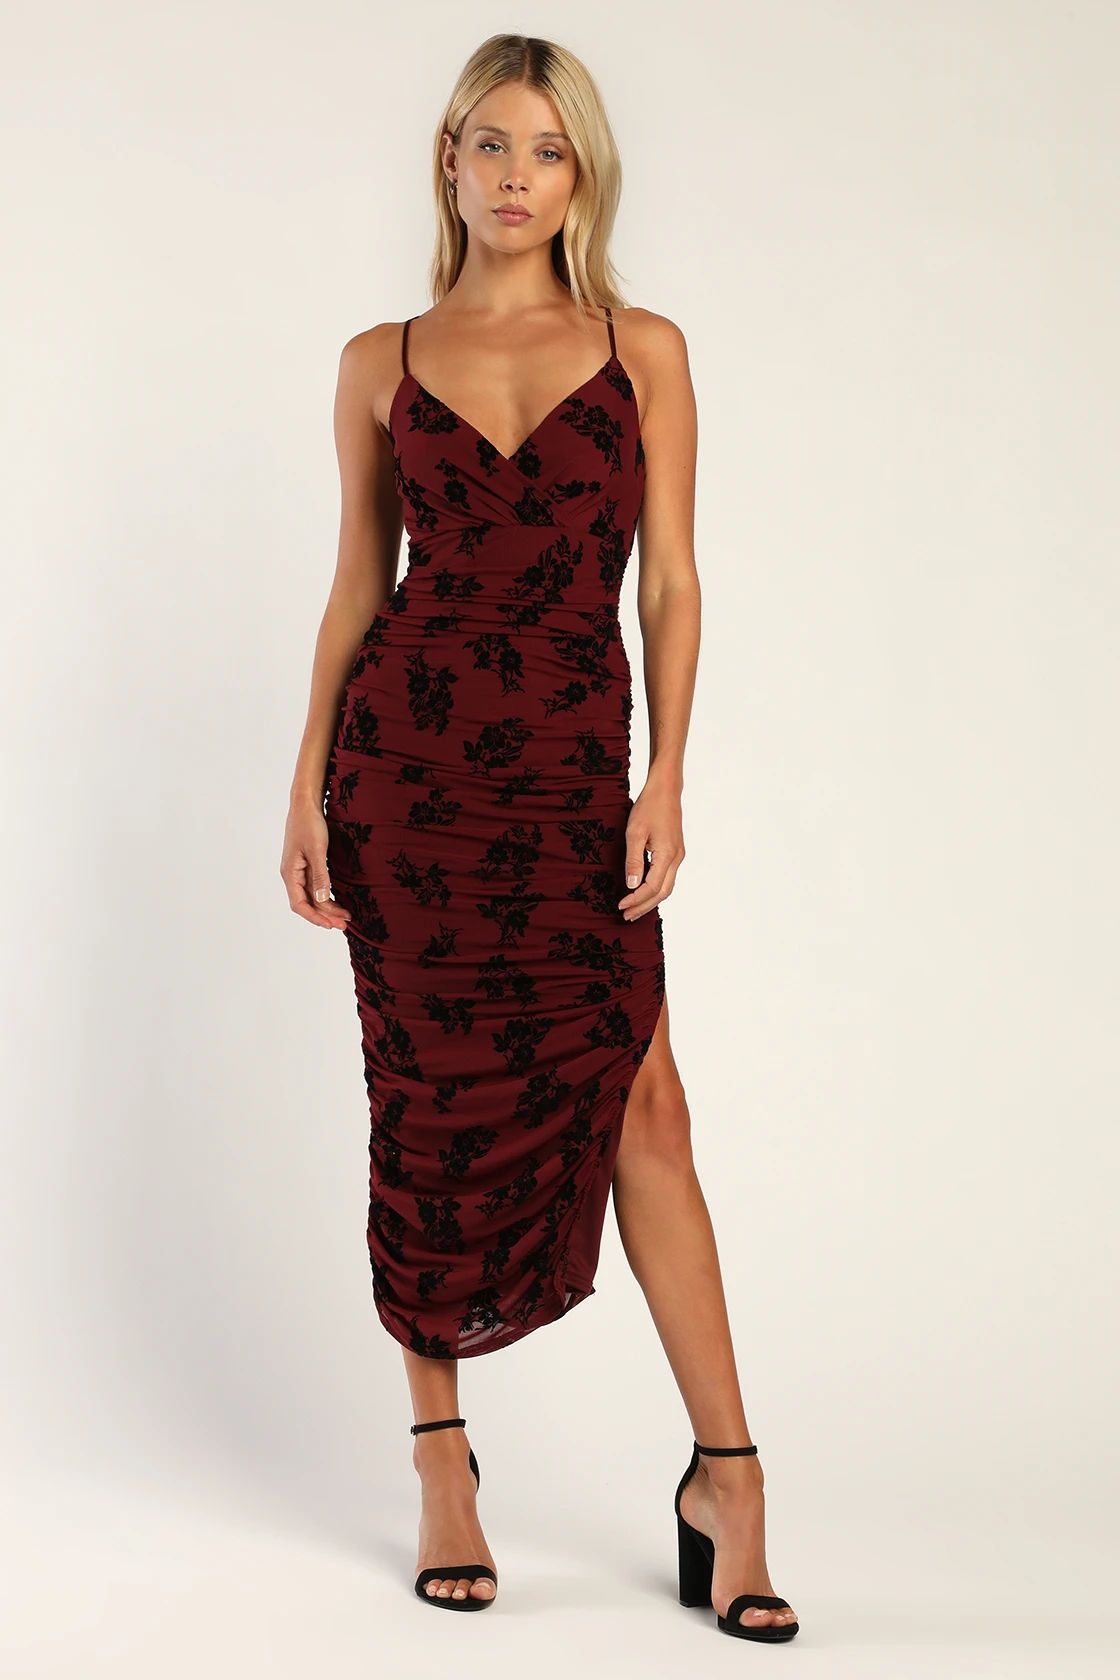 Eloquent Essence Burgundy Burnout Velvet Floral Midi Dress | Lulus (US)